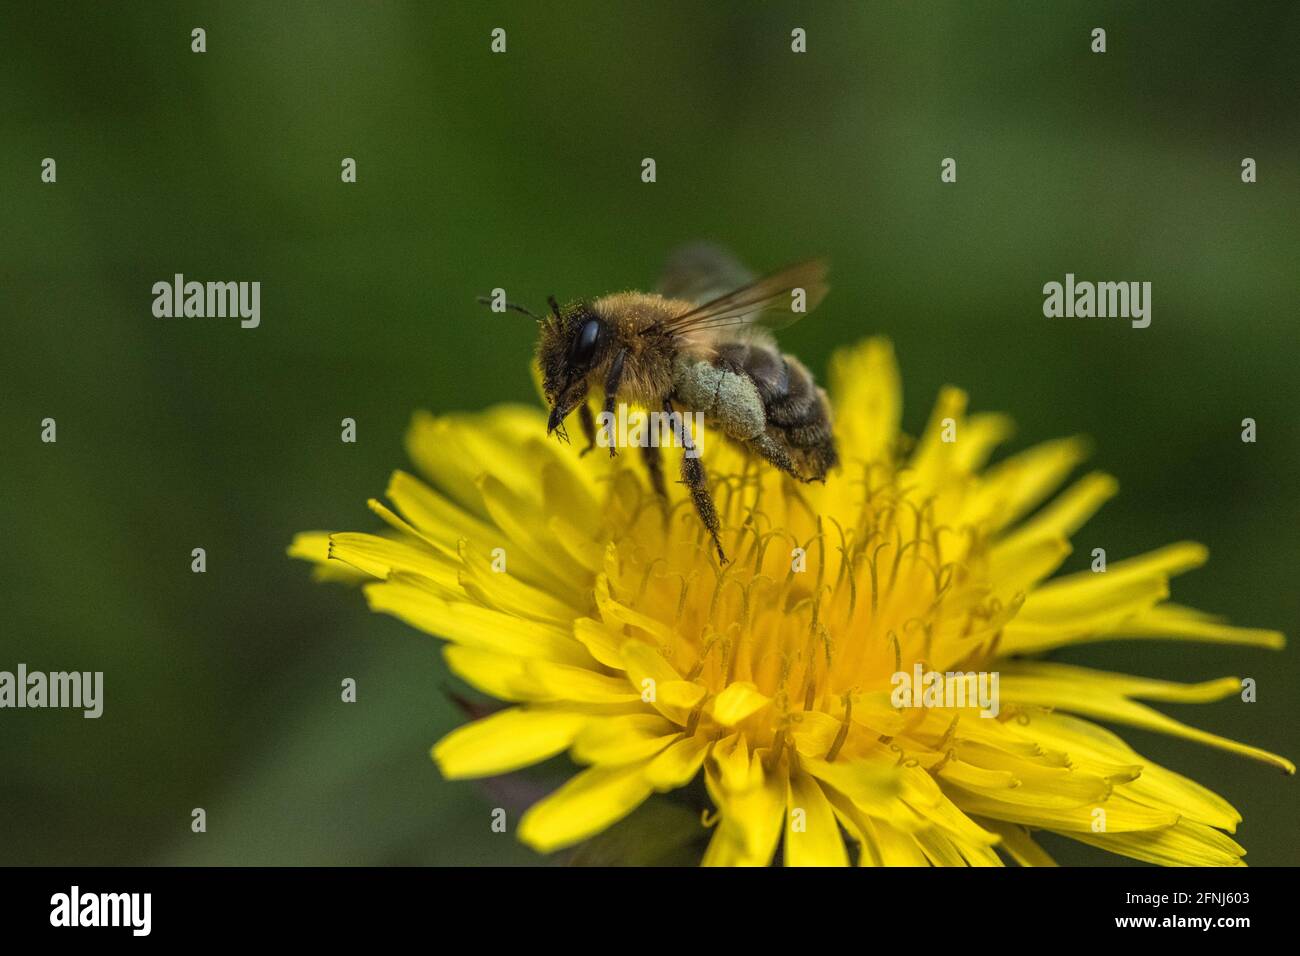 Honey Bee pollinating a Dandelion flower. Stock Photo